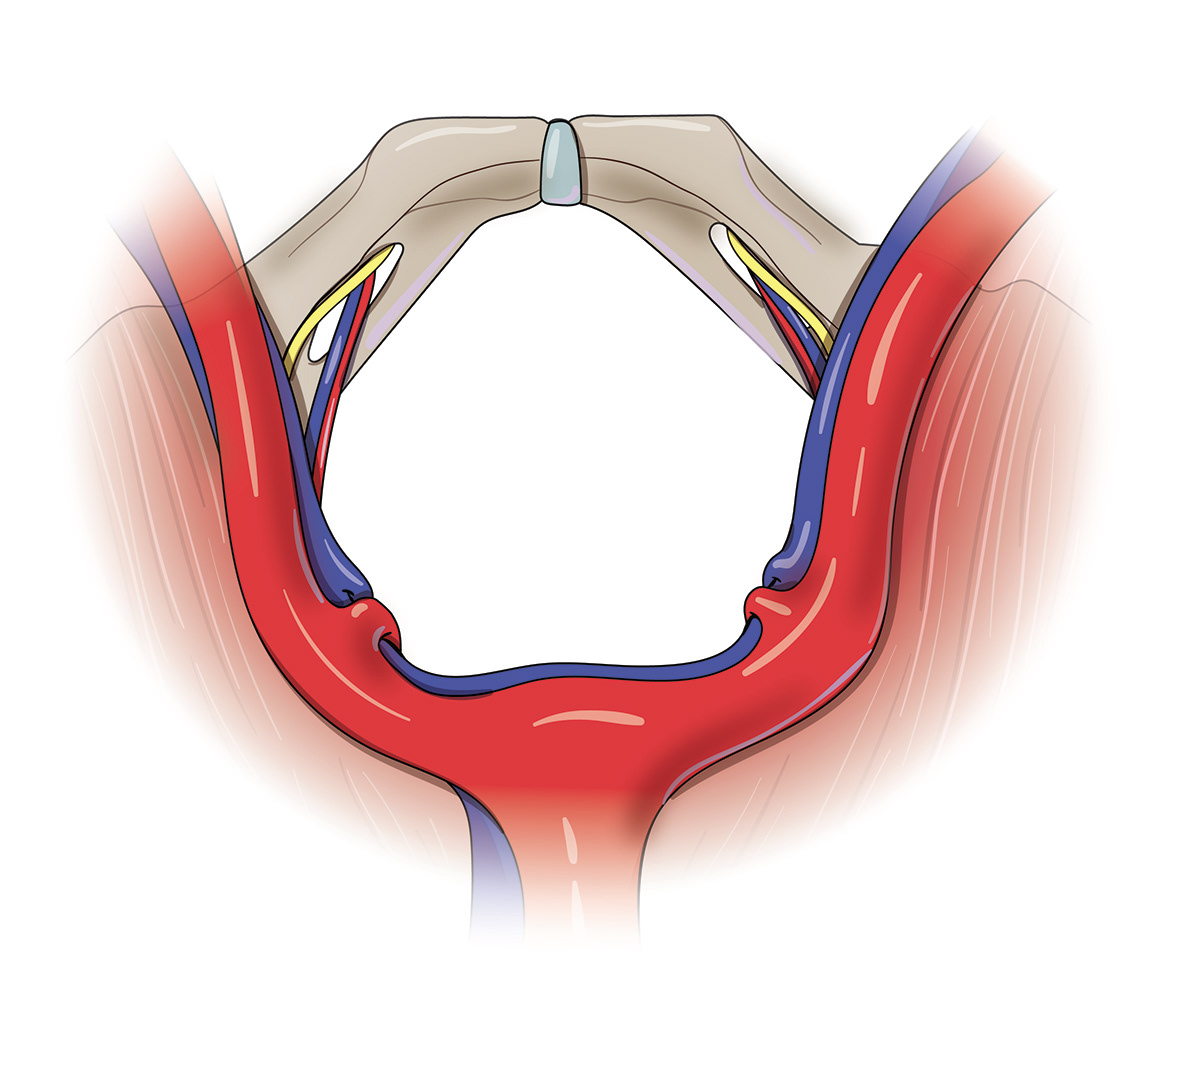 medical illustration urology pelvic anatomy anatomy anatomical illustration